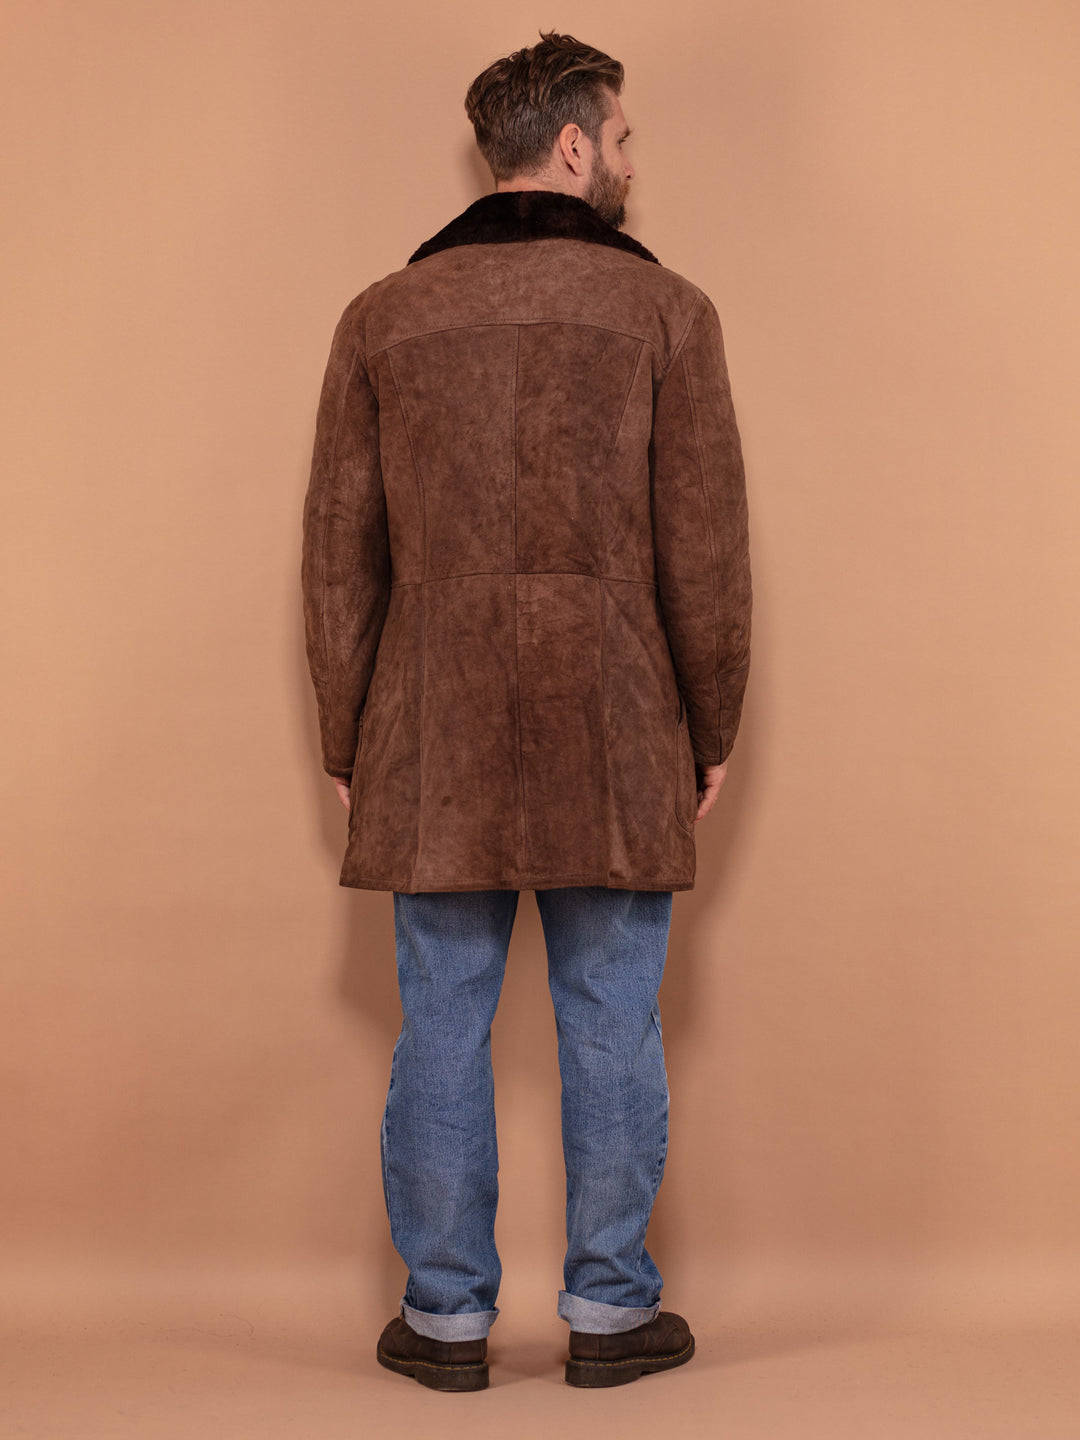 Men Shearling Suede Coat 70's, Size Large, Vintage Sheepskin Coat, Brown Suede Overcoat, Winter Outerwear, Warm Cozy Winter Coat